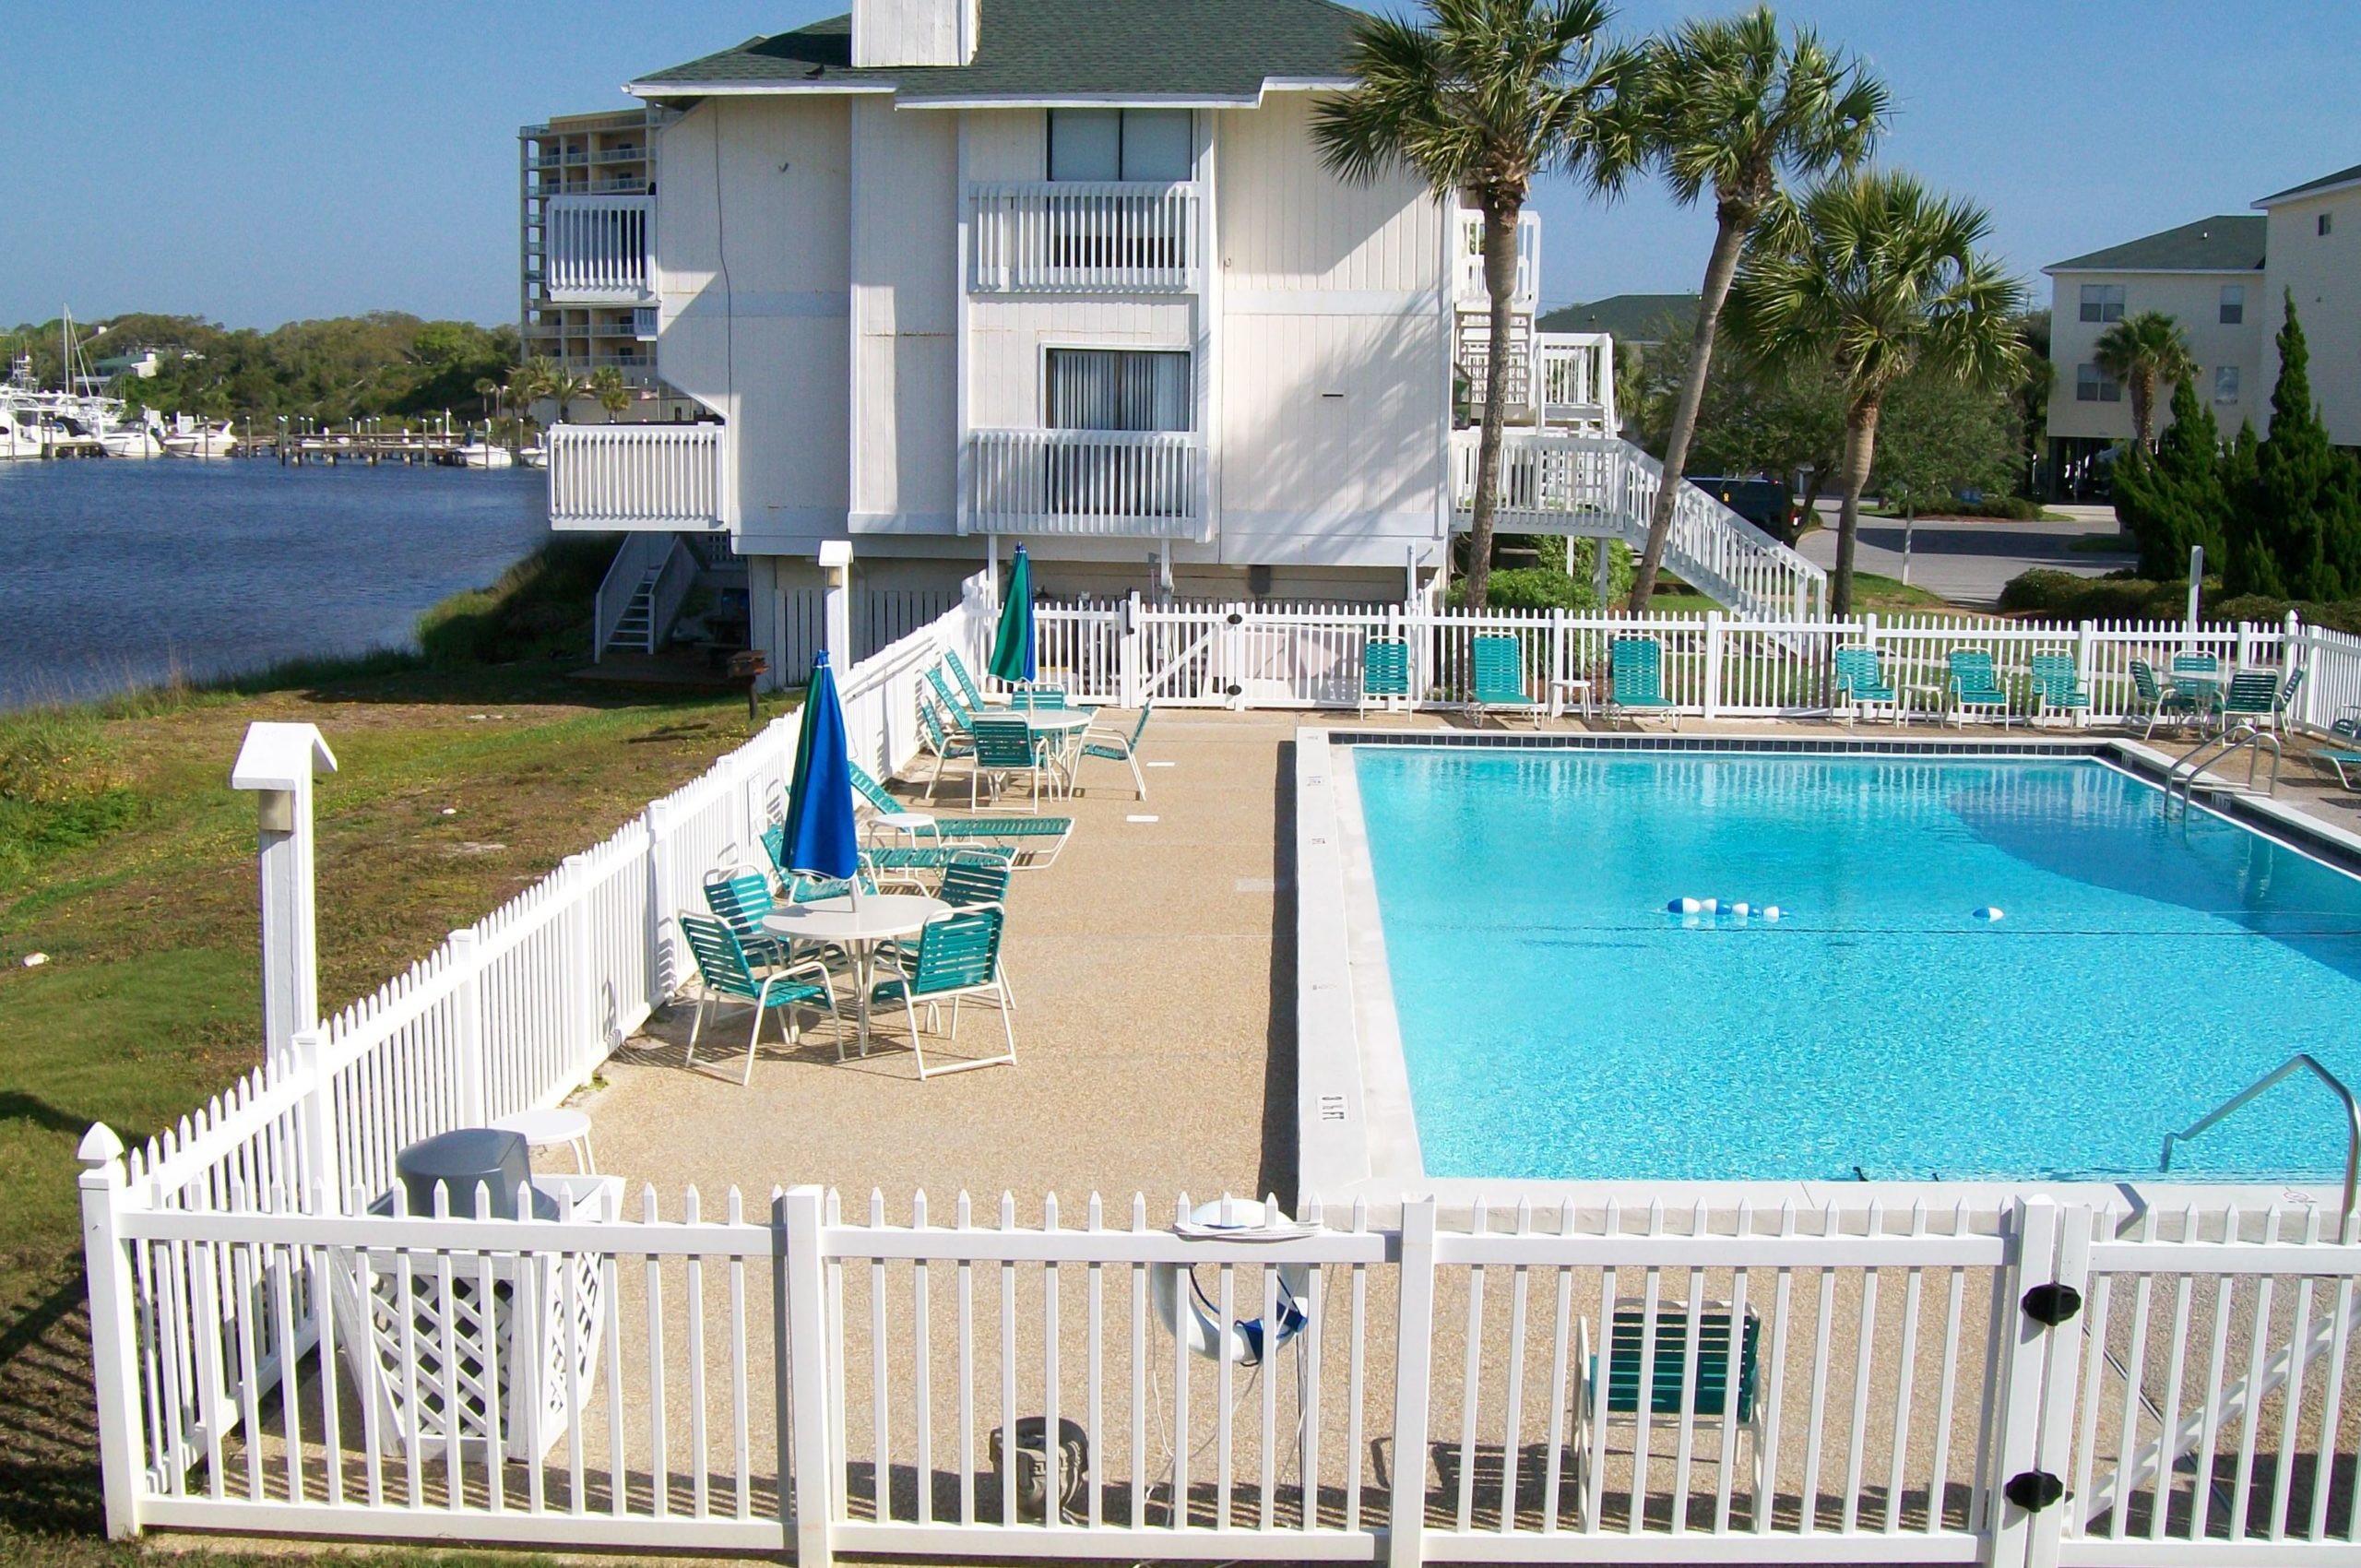 Sandpiper Cove Resort Holiday Isle Destin Florida Beach Vacations by Sunset Resort Rentals